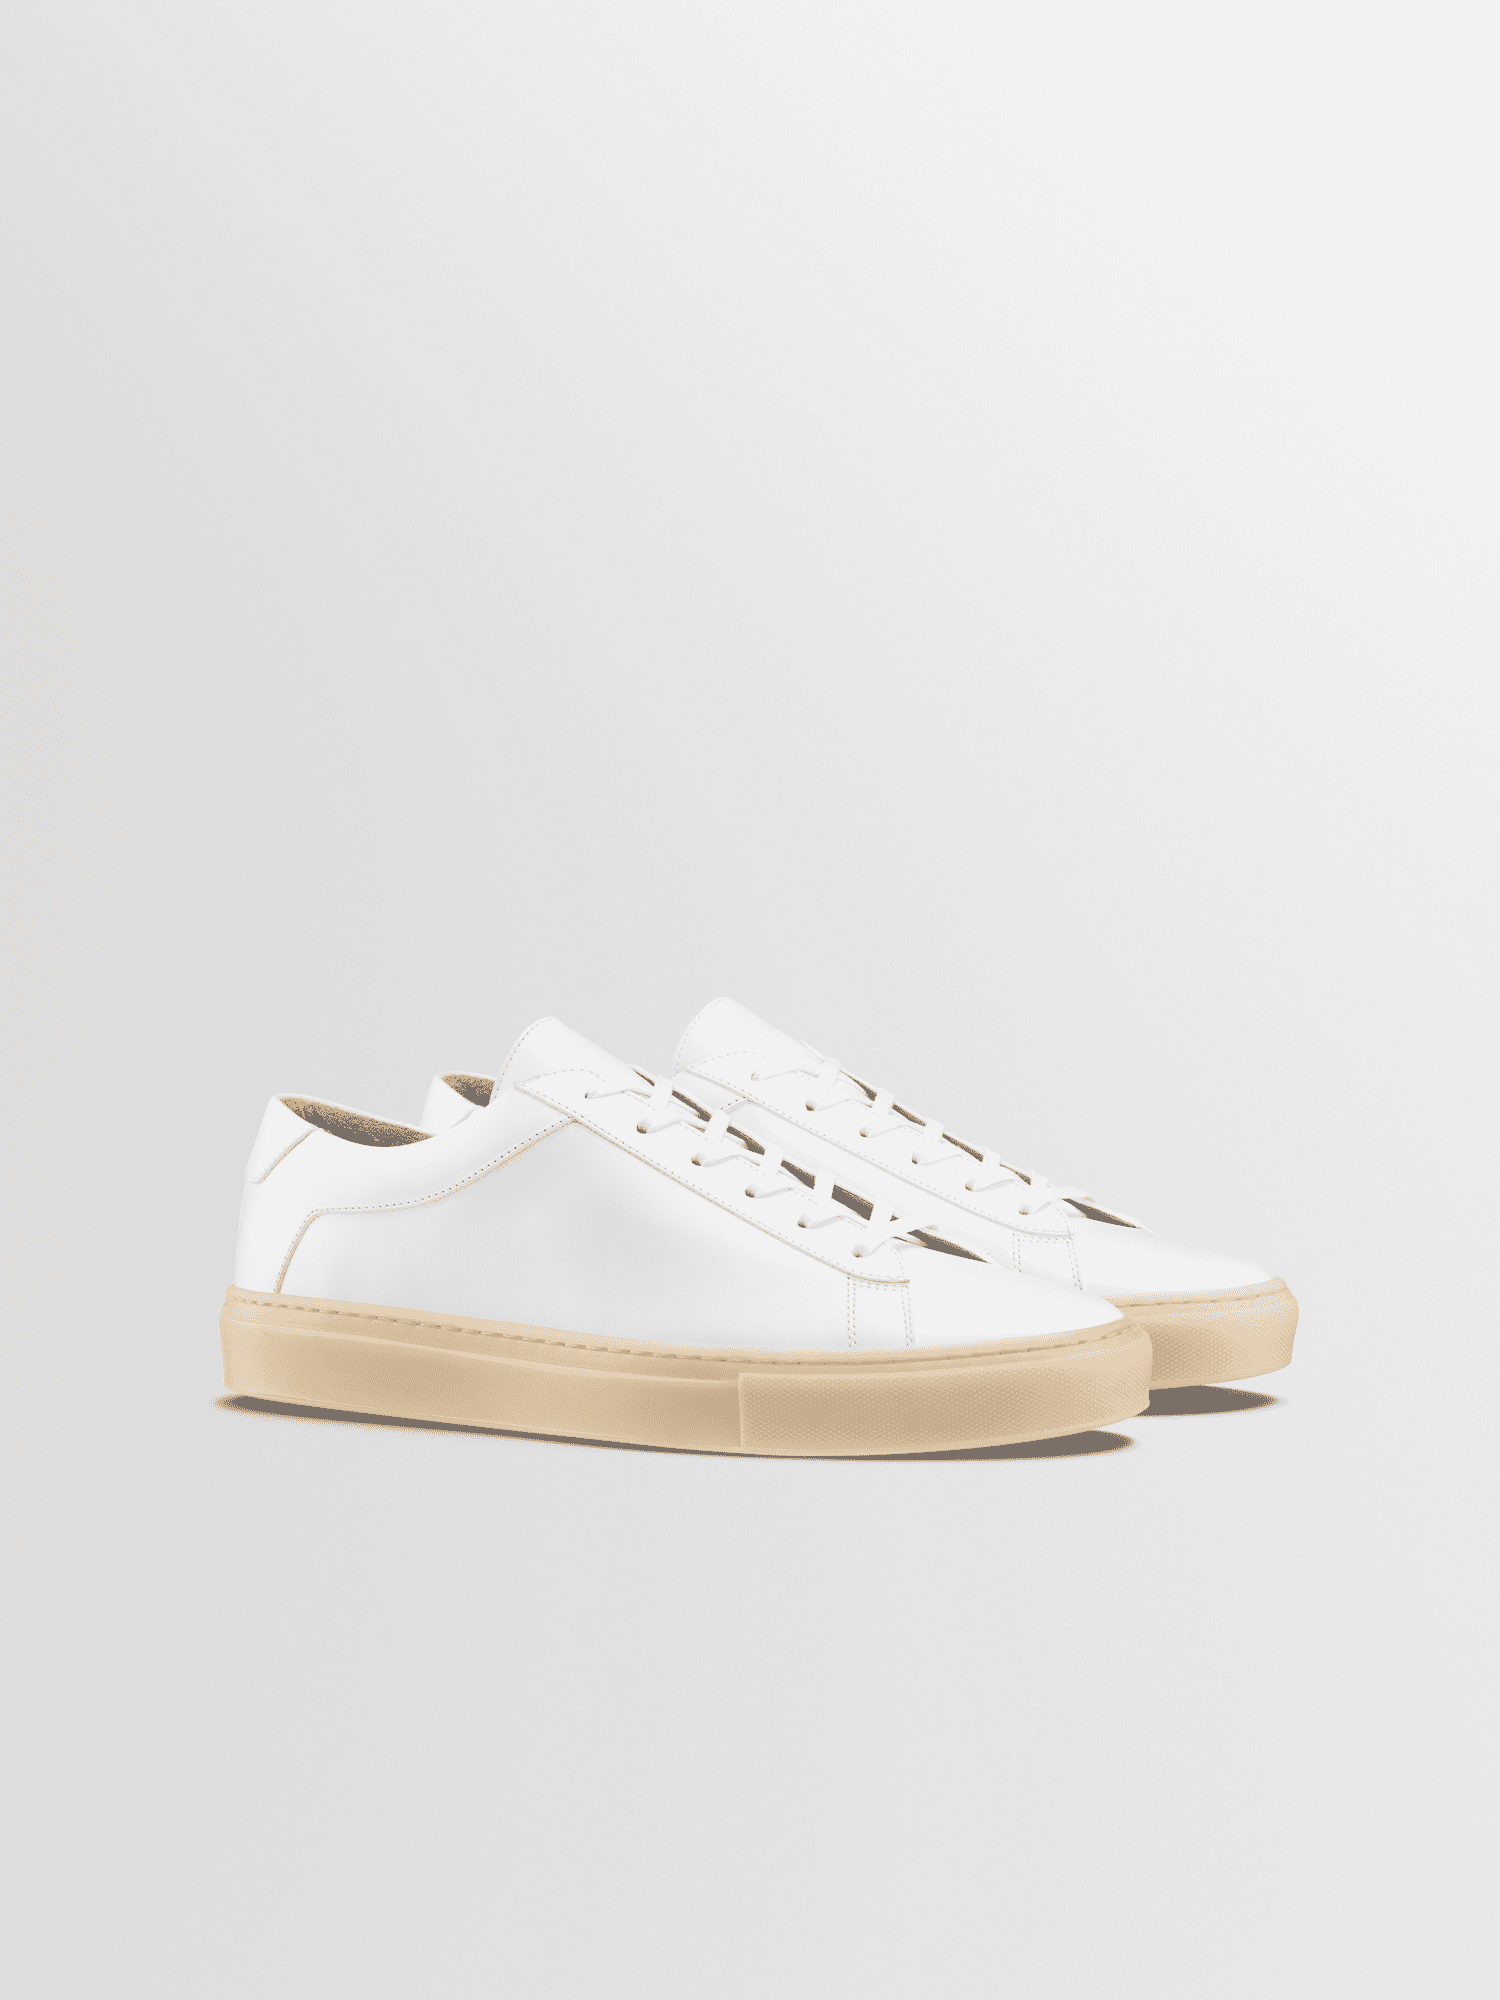 Koio Capri Sneakers https://www.koio.co/products/capri-white-light-gum-mens?variant=41961389981865